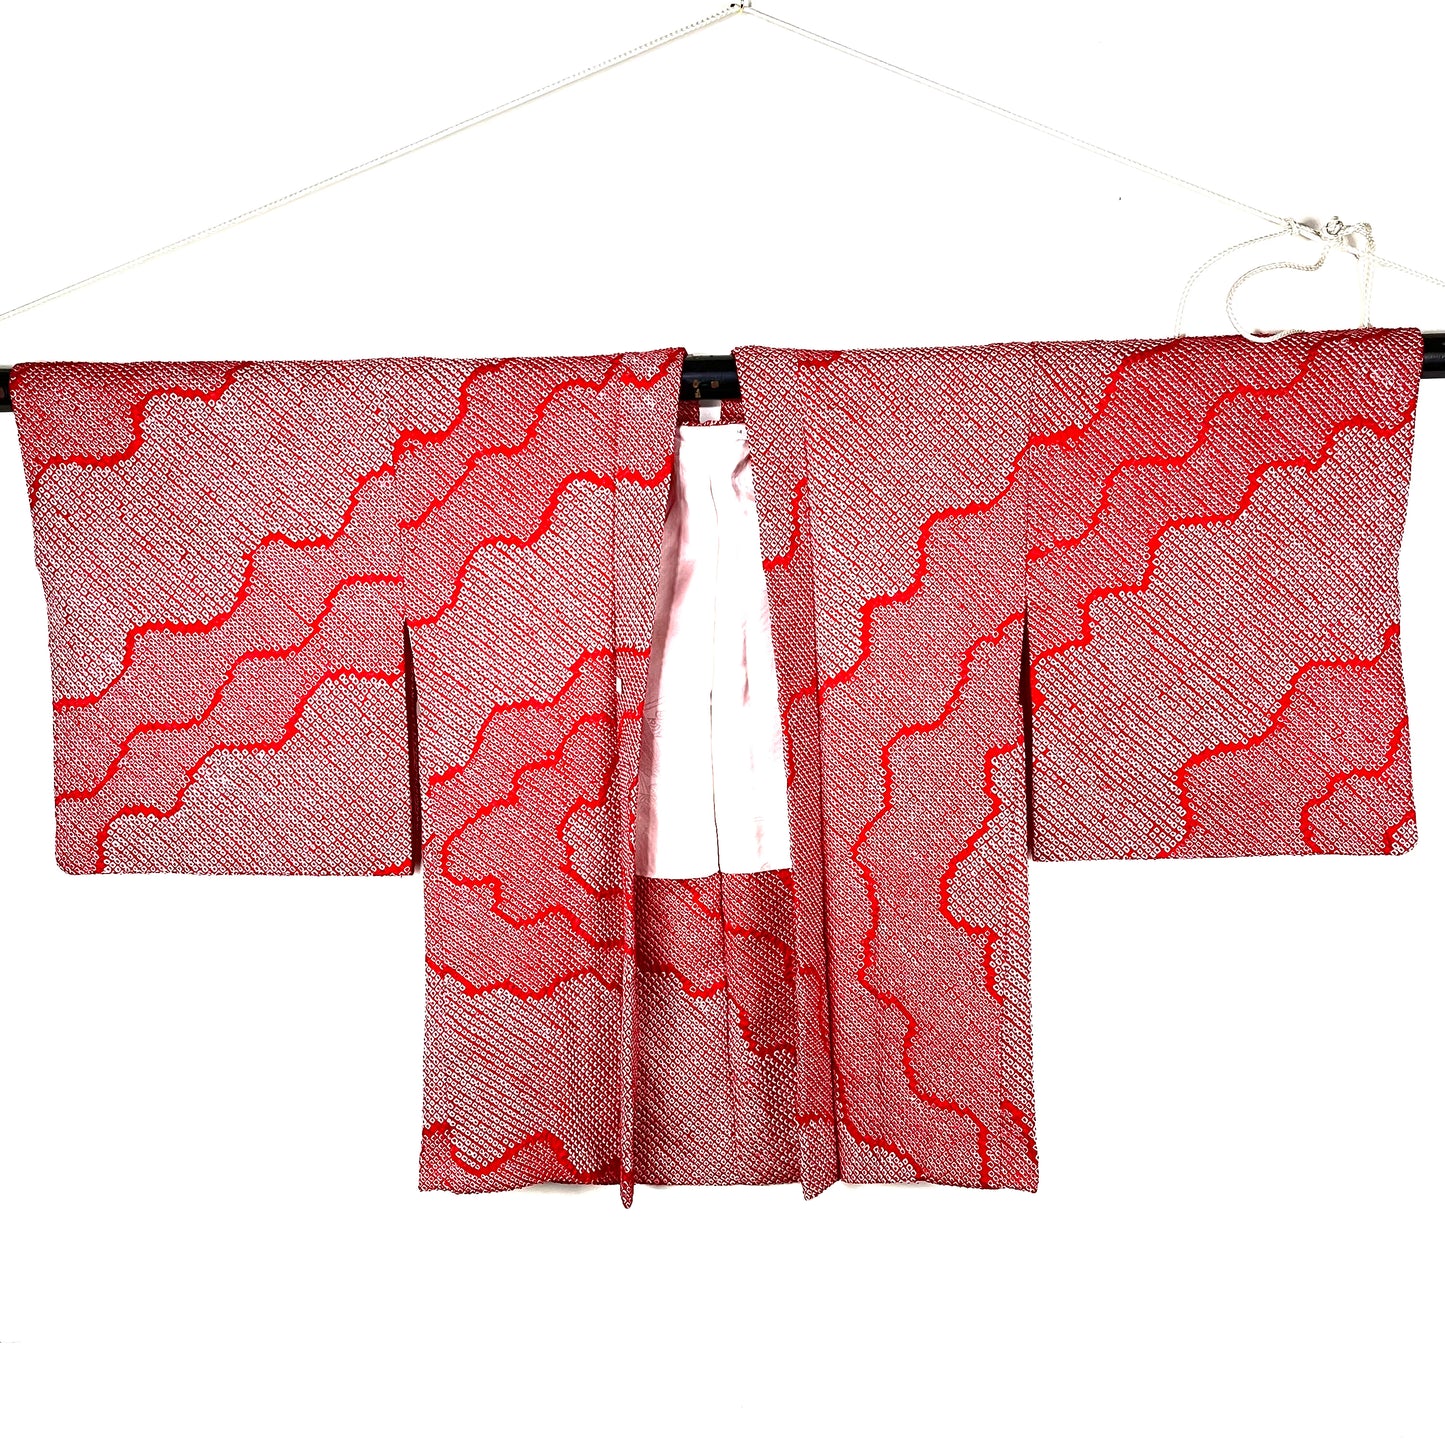 Vintage Japanese Silk Haori Coat in Shibori Tie-dye Bright Red Wavy Pattern 28"L